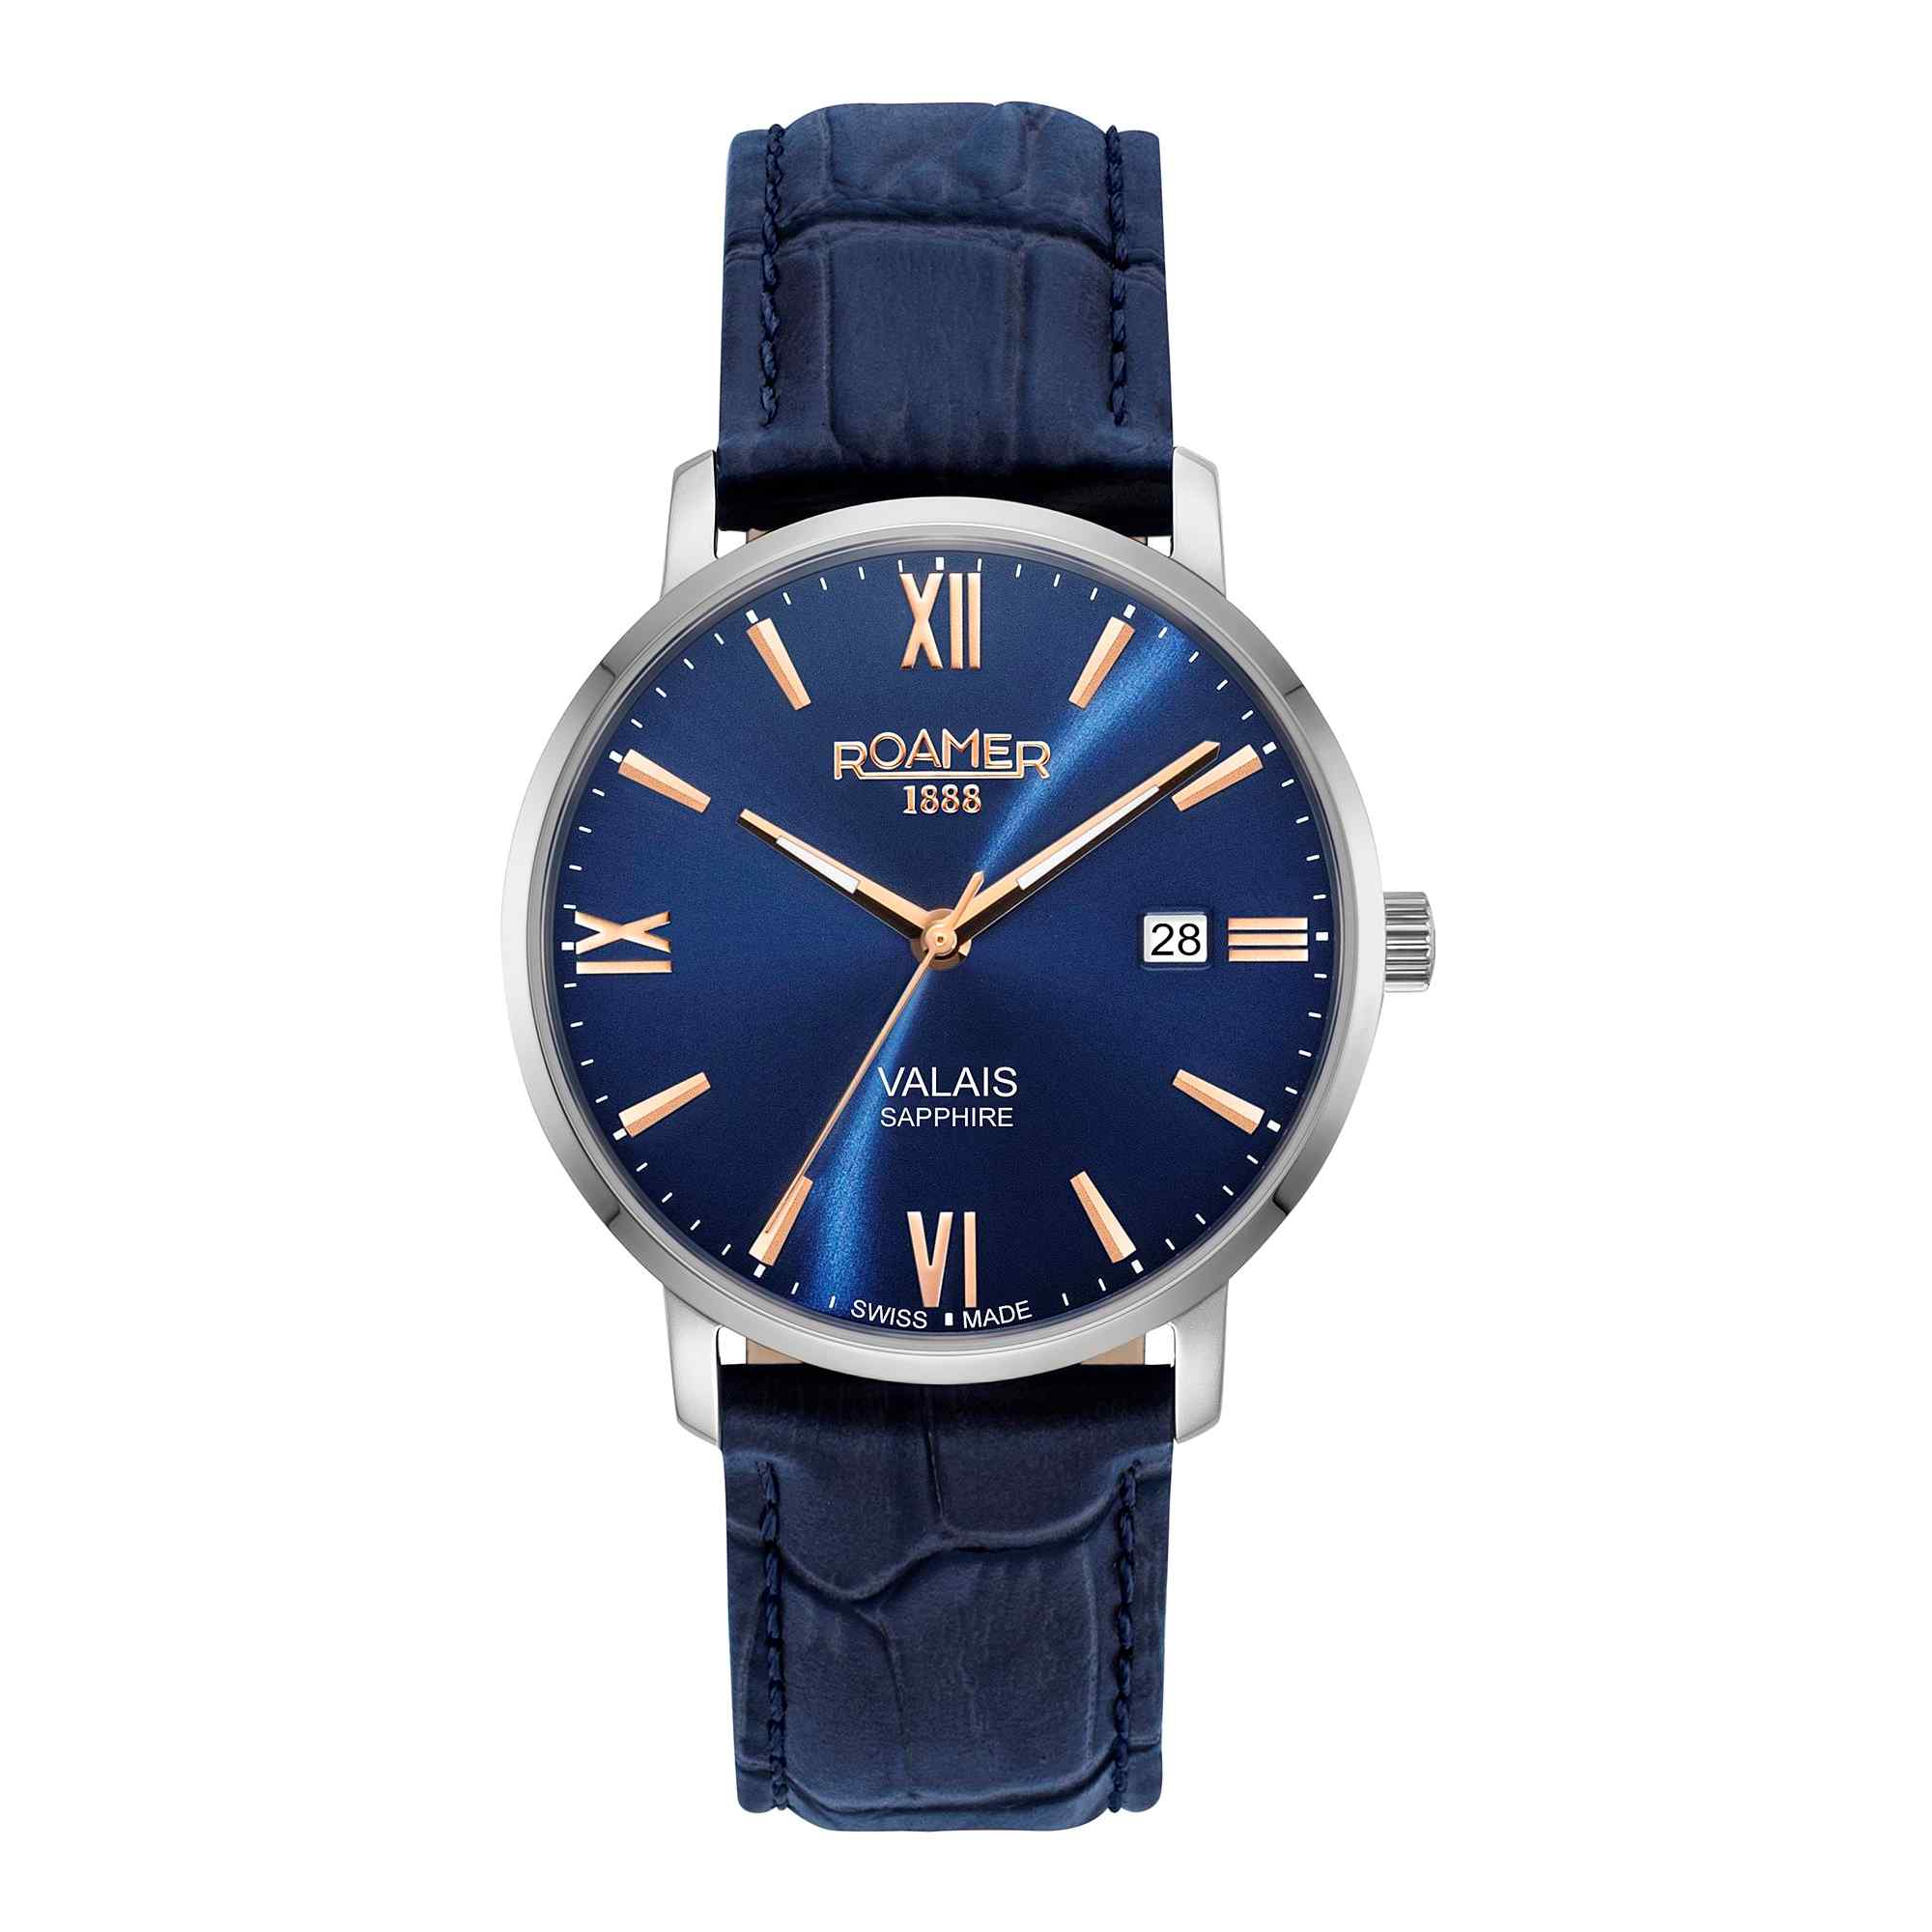 Photos - Wrist Watch Roamer 958833 41 43 05 Men's Valais Blue Leather Strap Wristwatch 